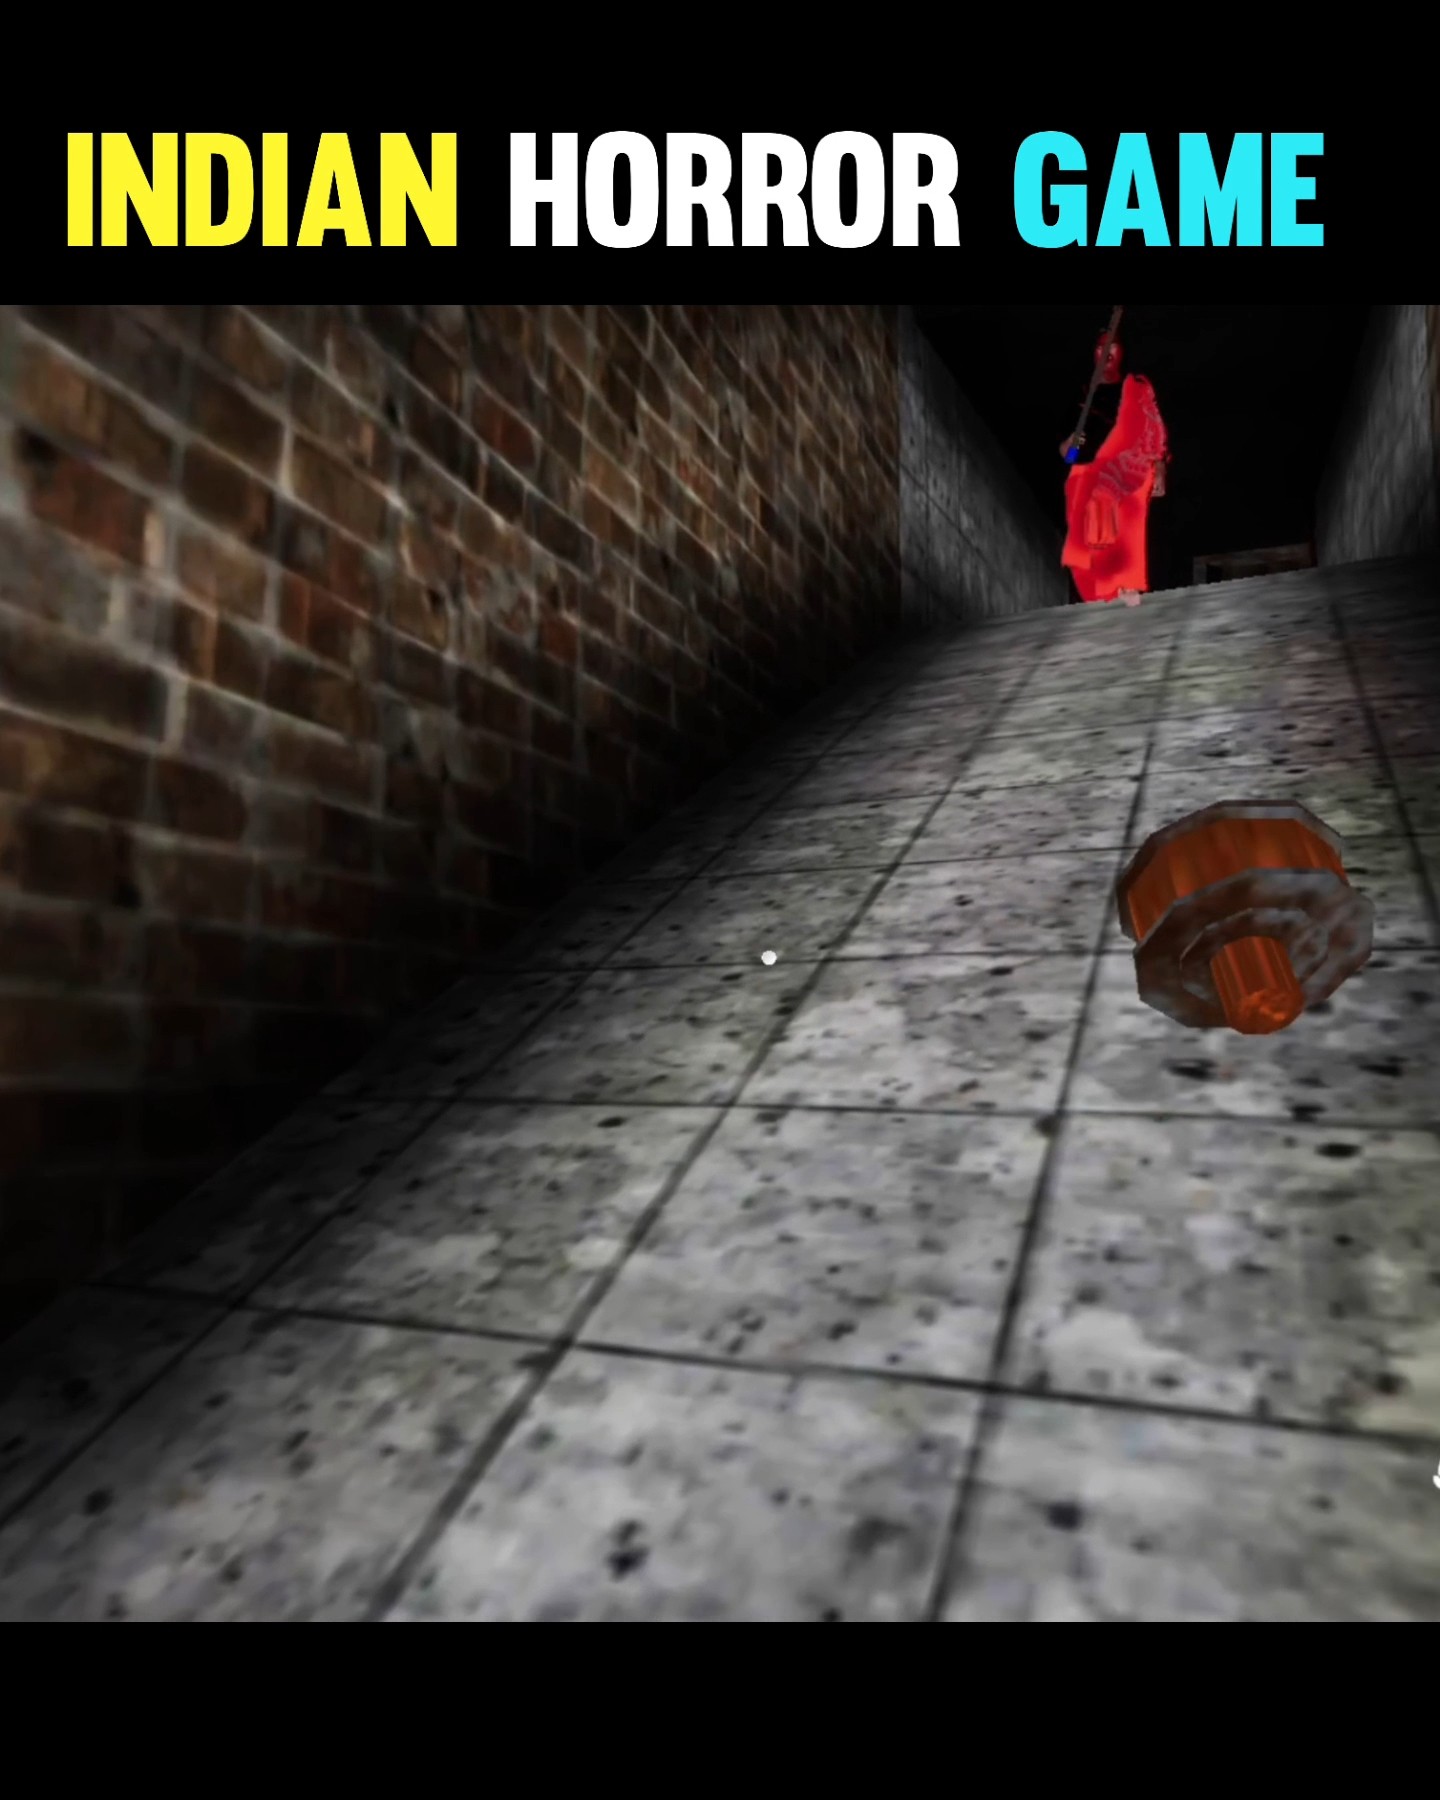 I finally play Kamla in mobile weather army Indian horror game Kamla